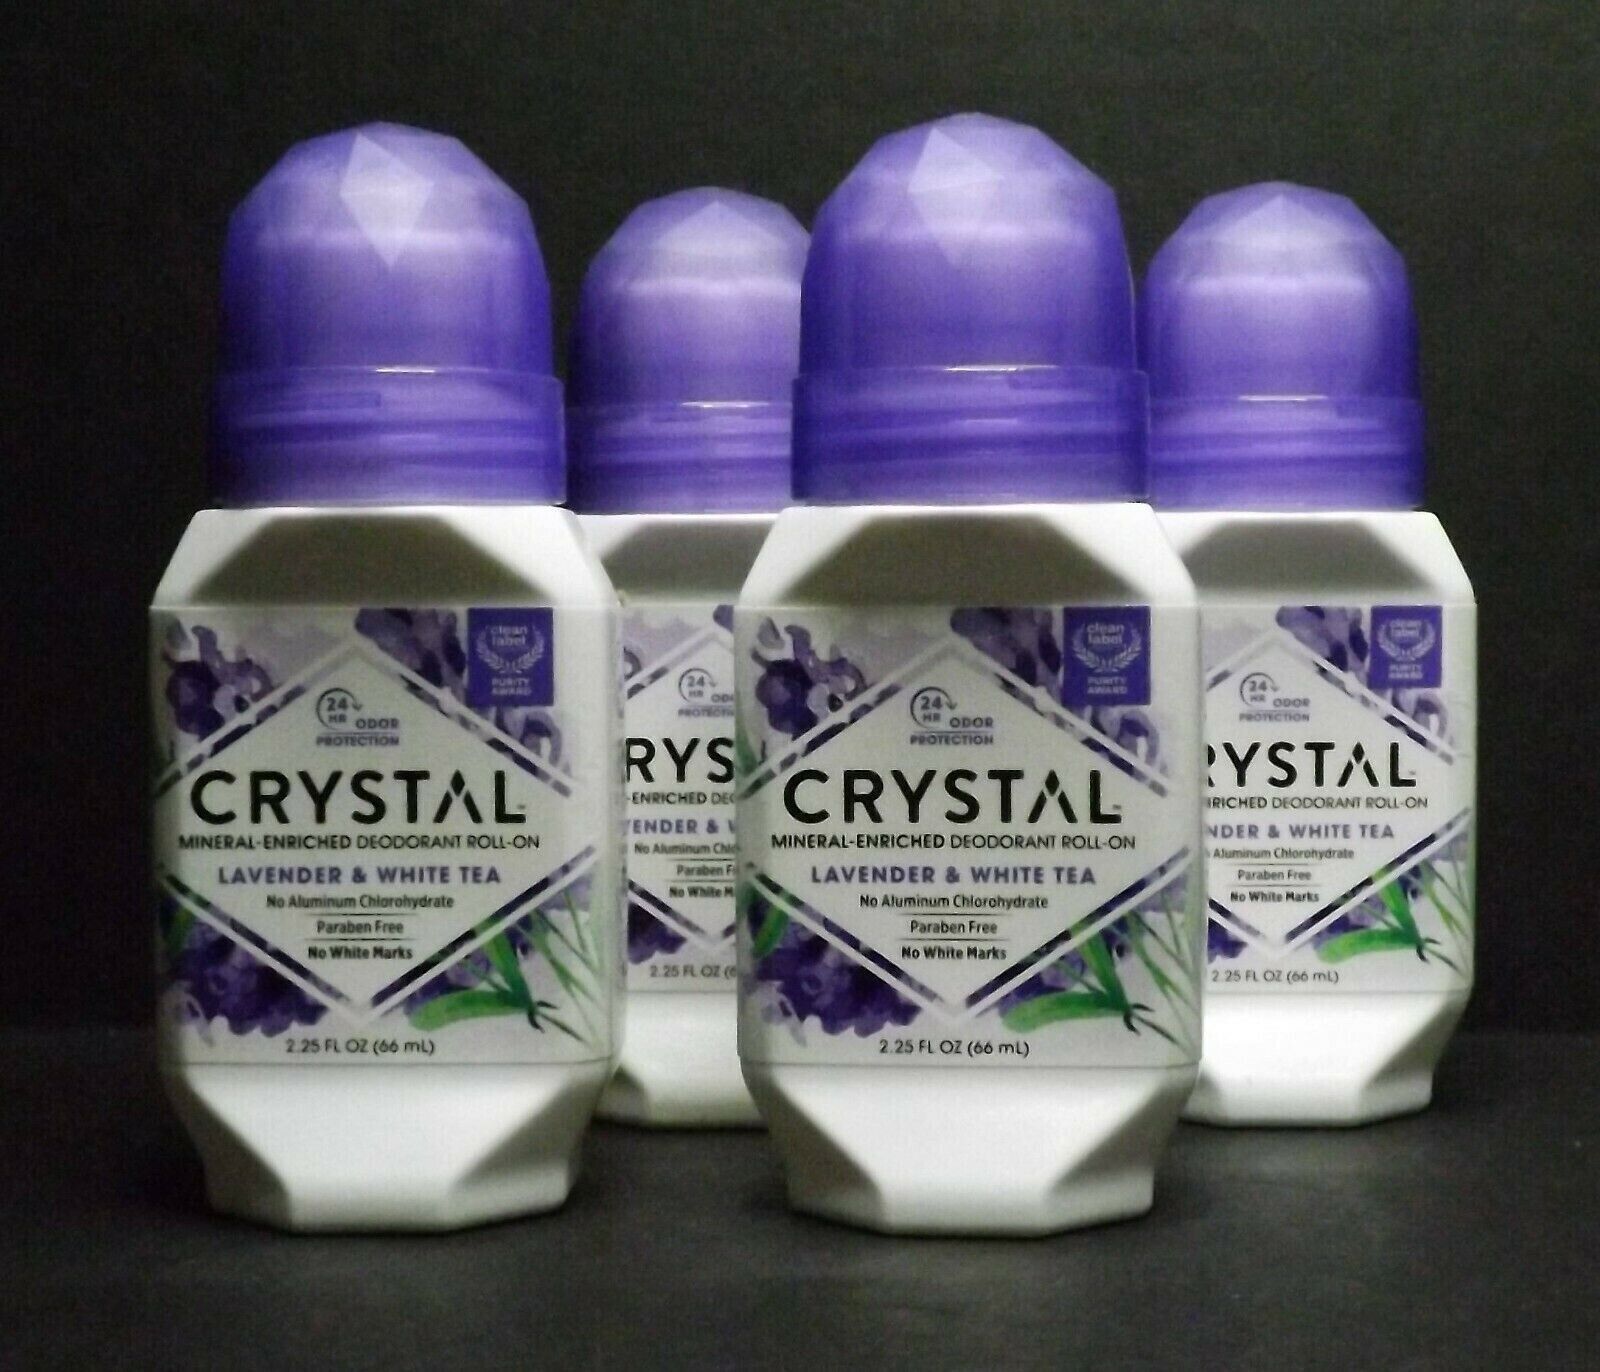 4 Pack Crystal Body Deodorant Natural Deodorant Roll-On Lavender 2.25 fl oz New